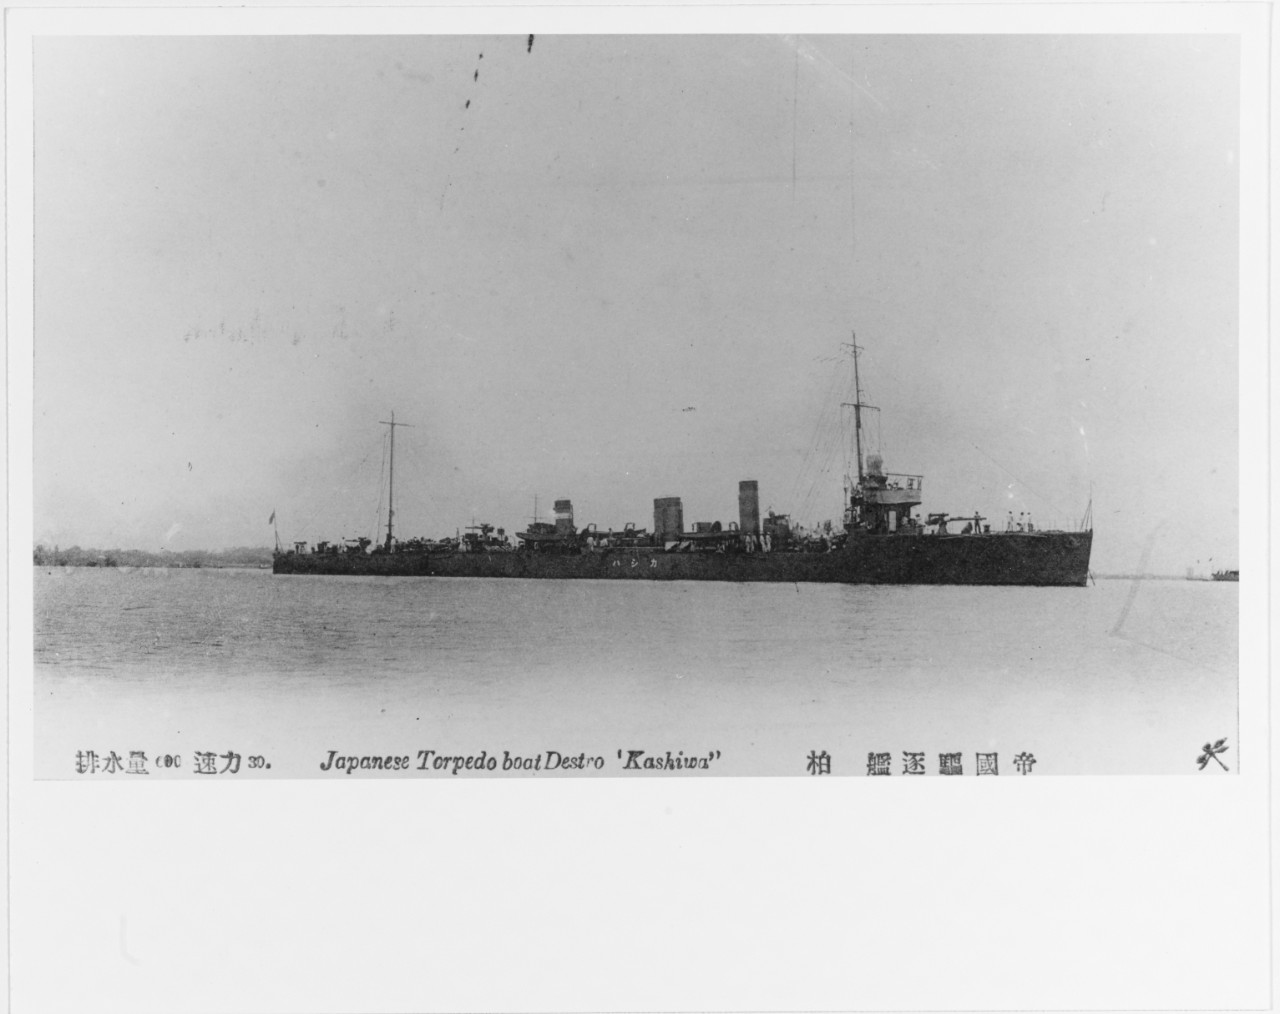 KASHIWA (Japanese Destroyer, 1915-1931)